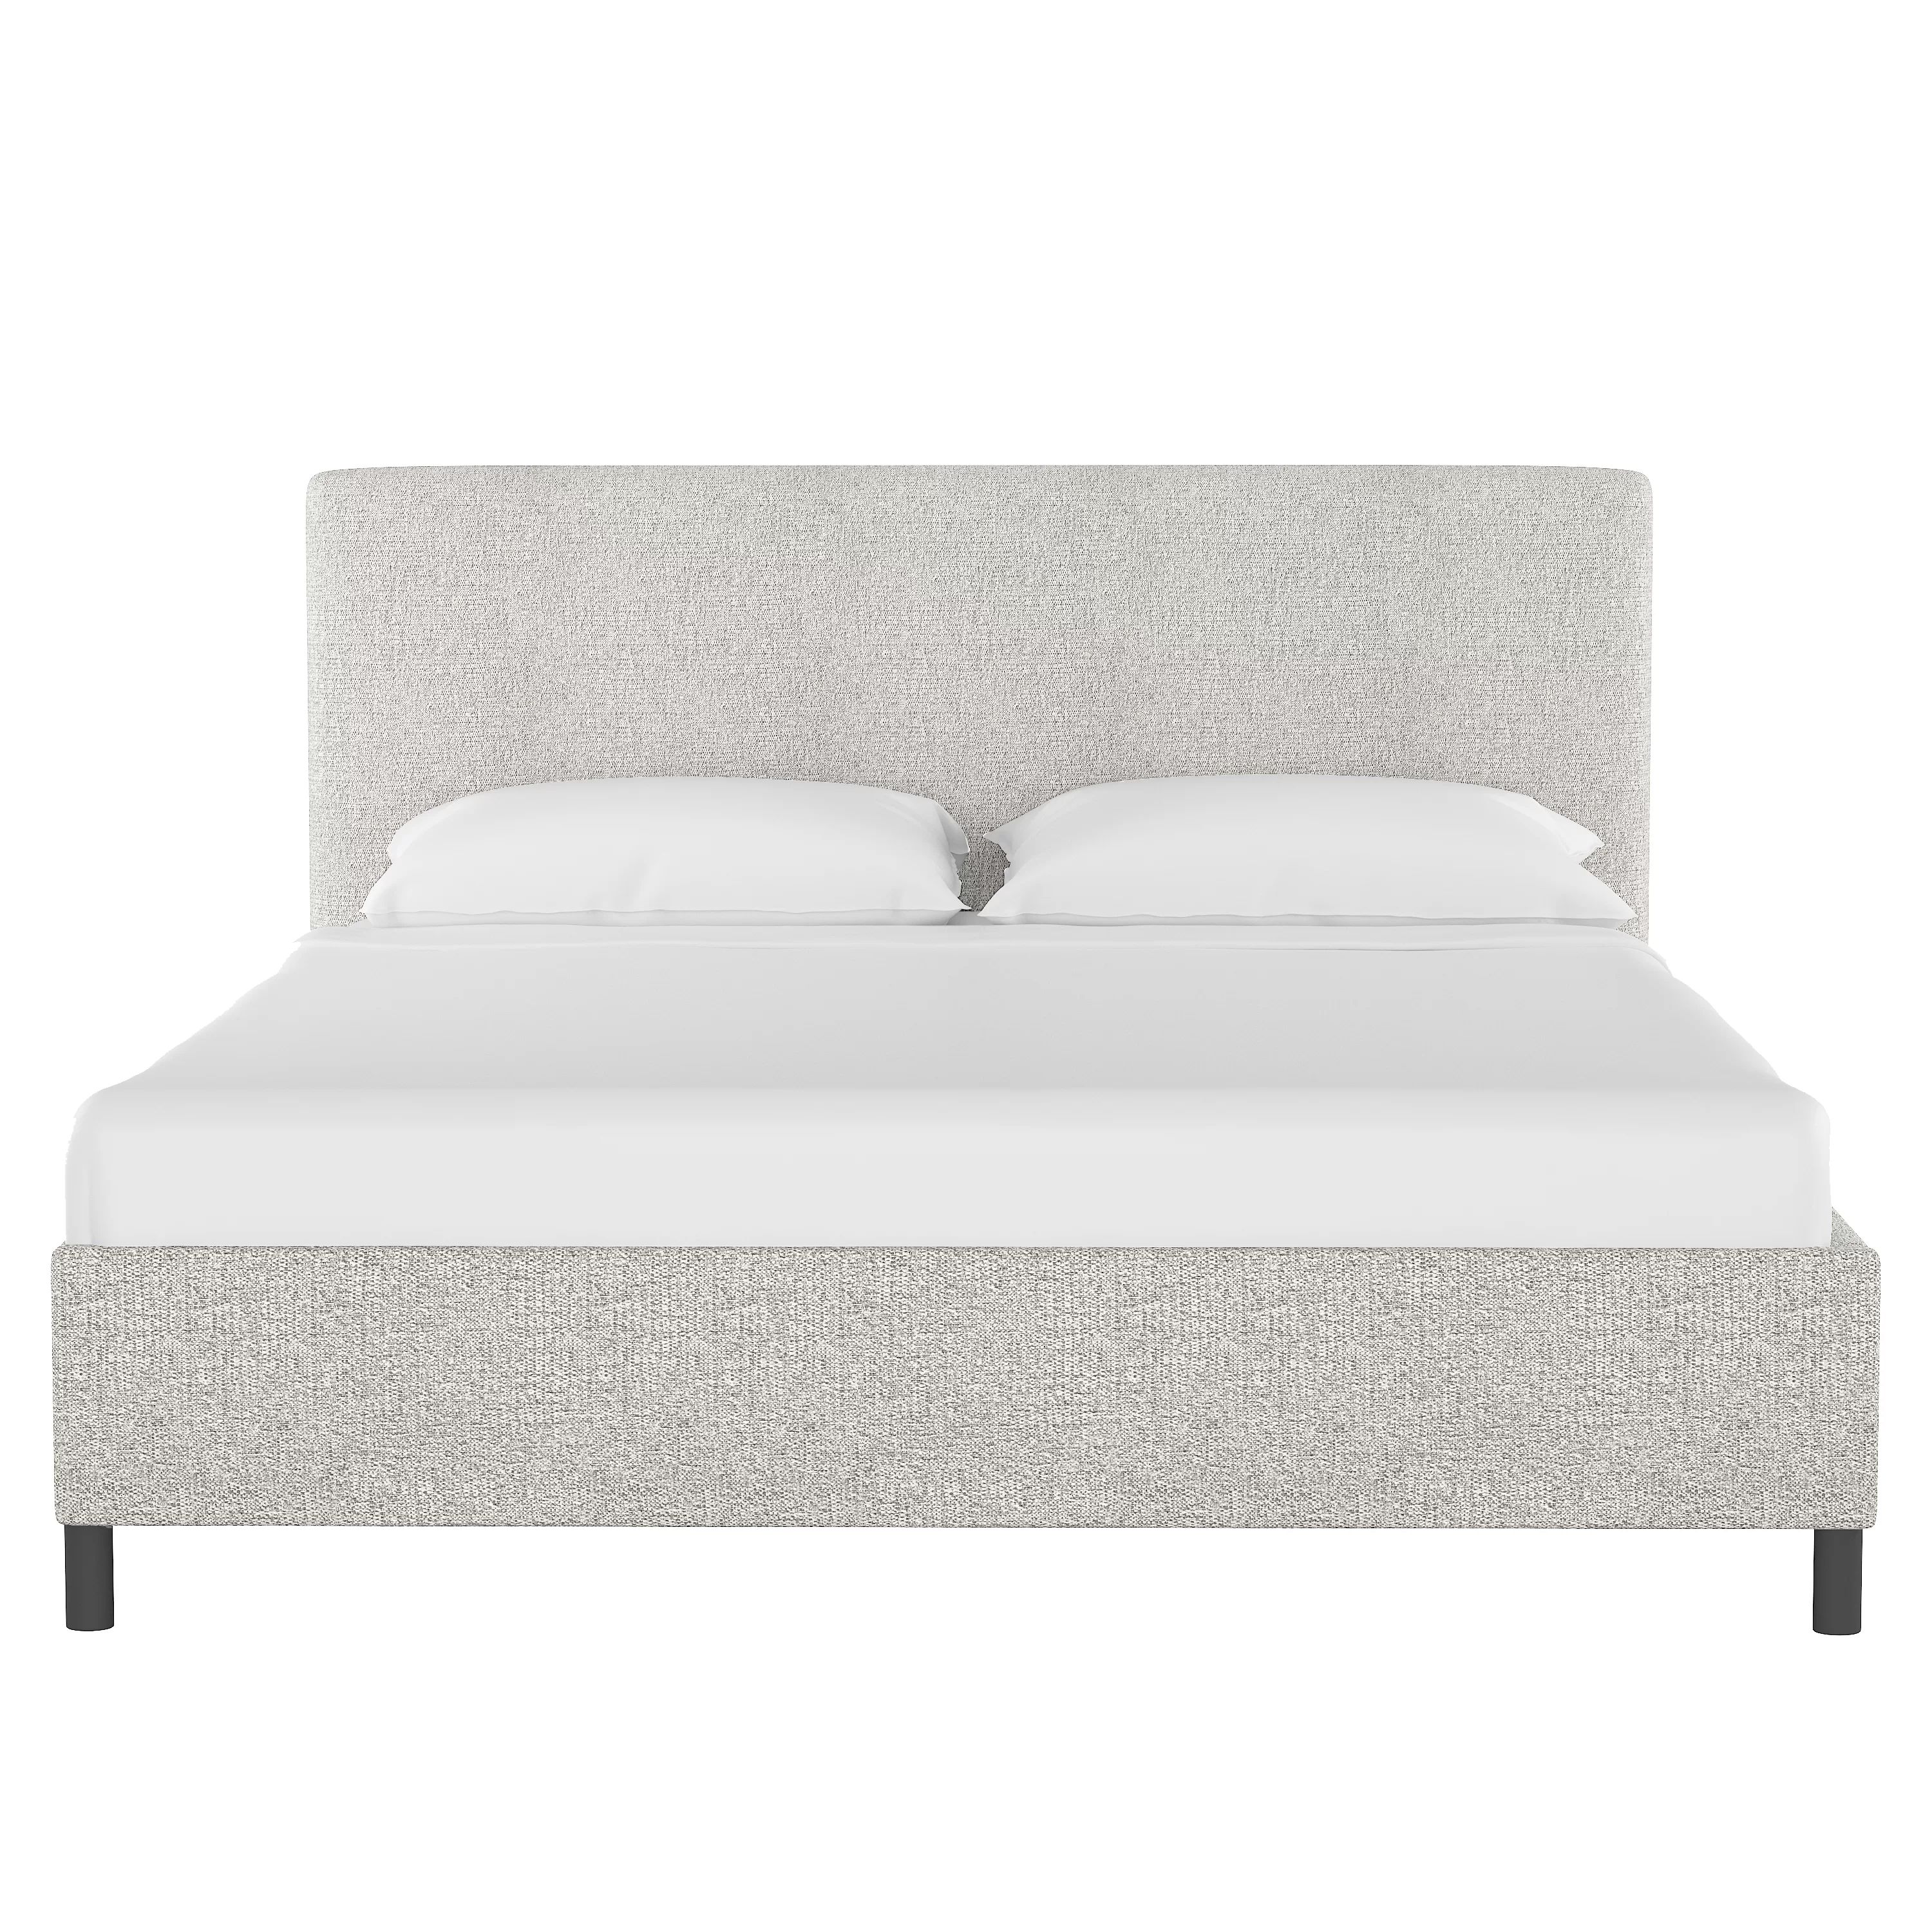 Pyburn Upholstered Low Profile Platform Bed | Wayfair Professional